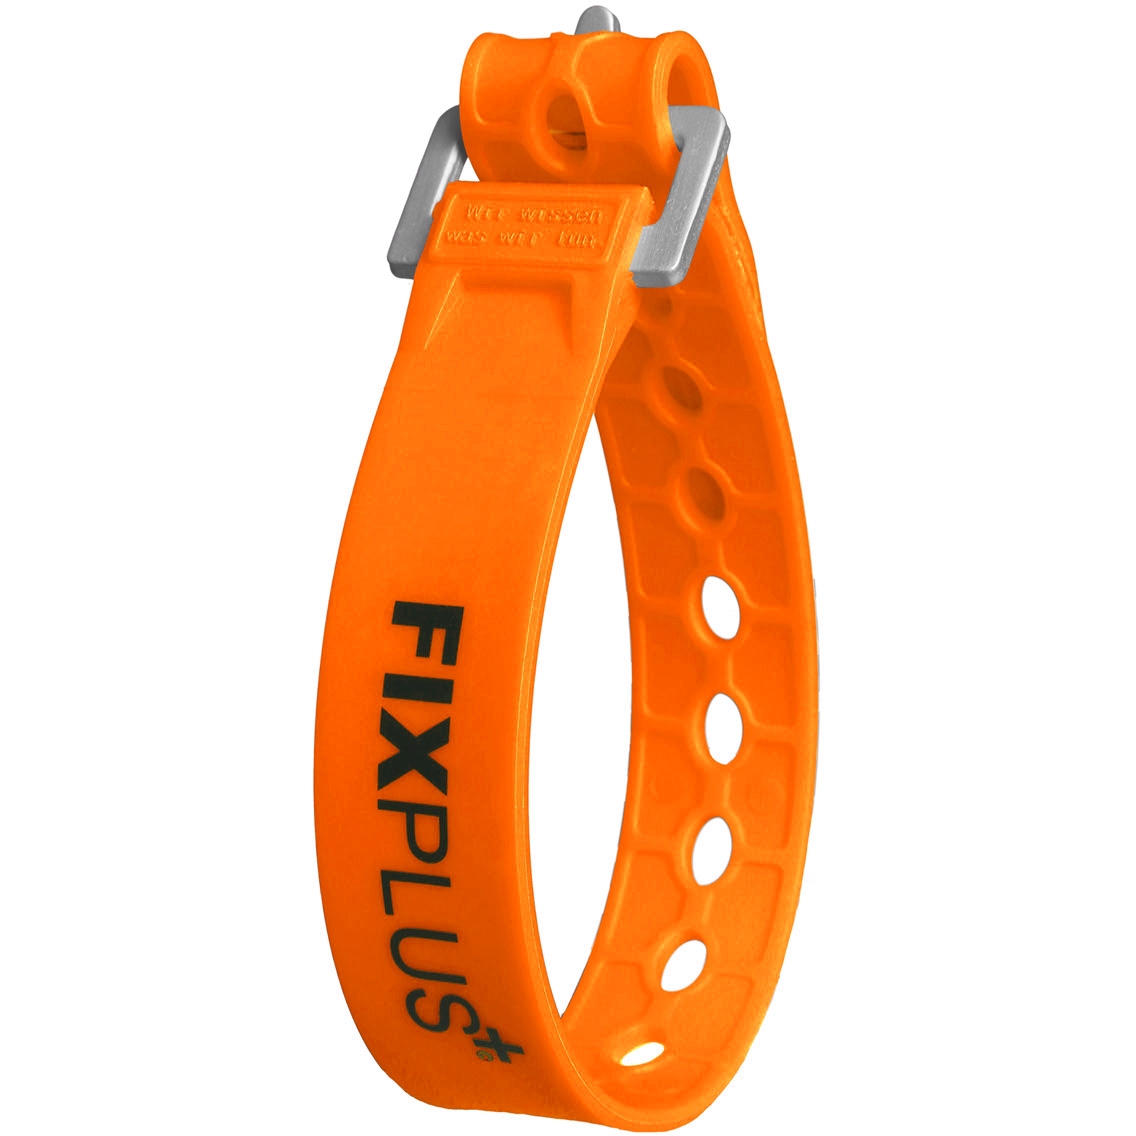 Productfoto van FixPlus Strap 35cm - orange